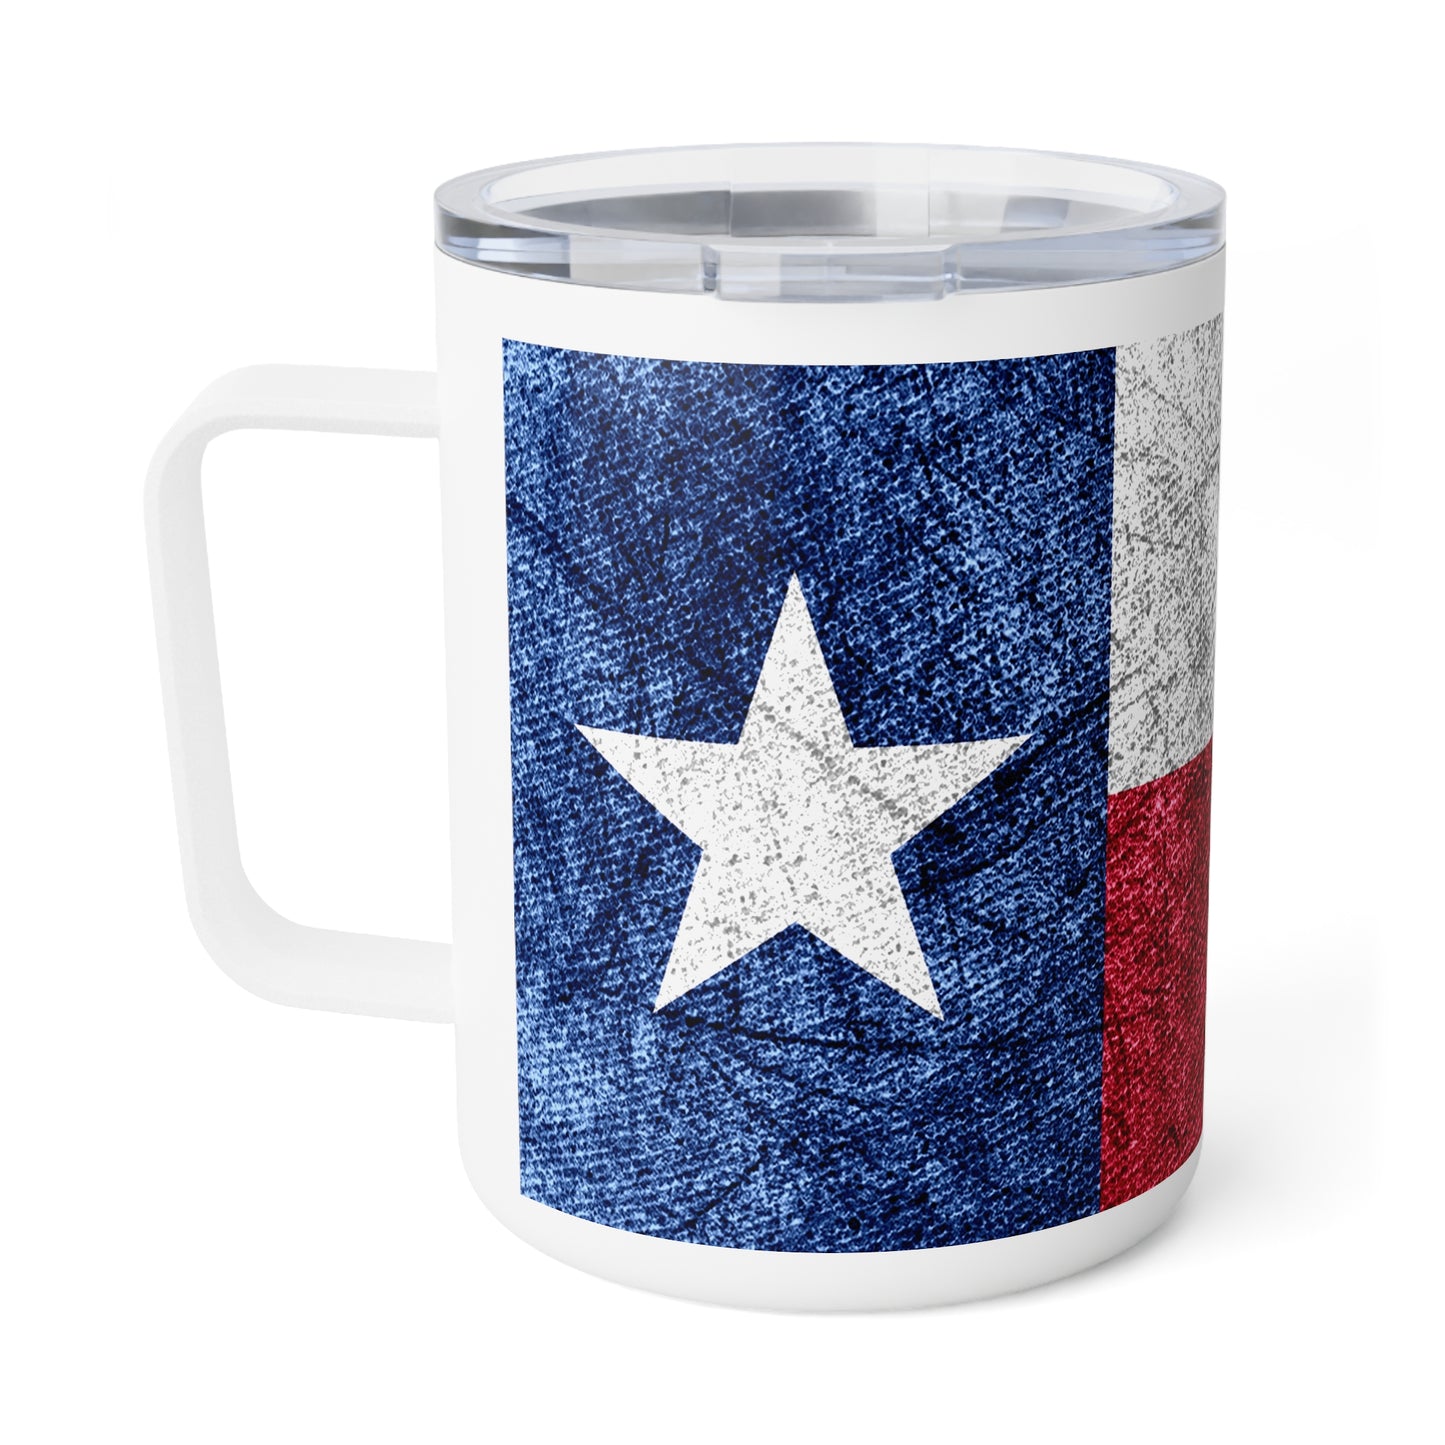 KHS - Texas Insulated Coffee Mug, 10oz